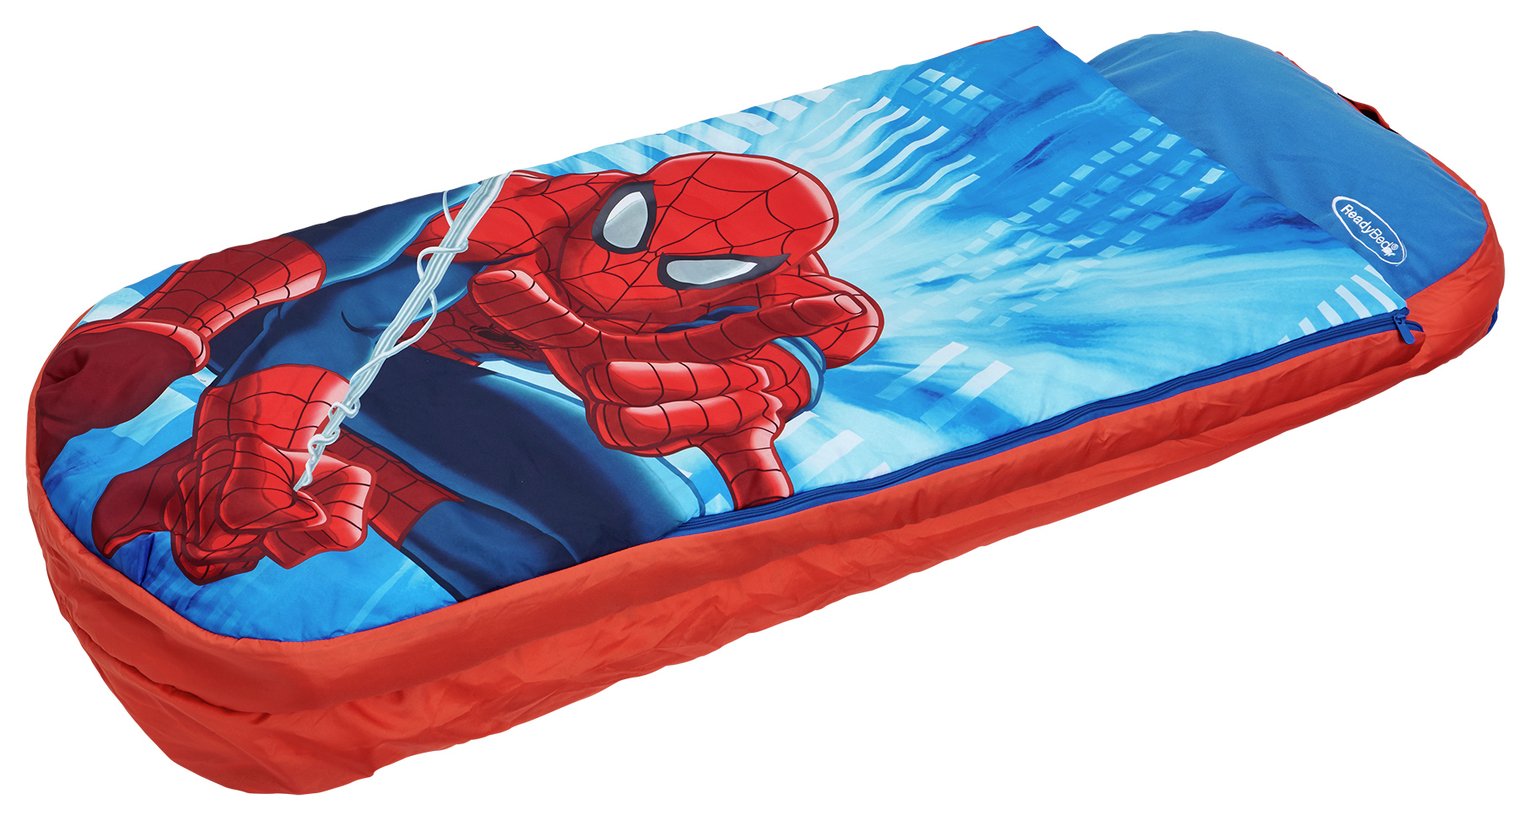 marvel Avengers inflatable sleepover Kids ReadyBed camping sleeping bag